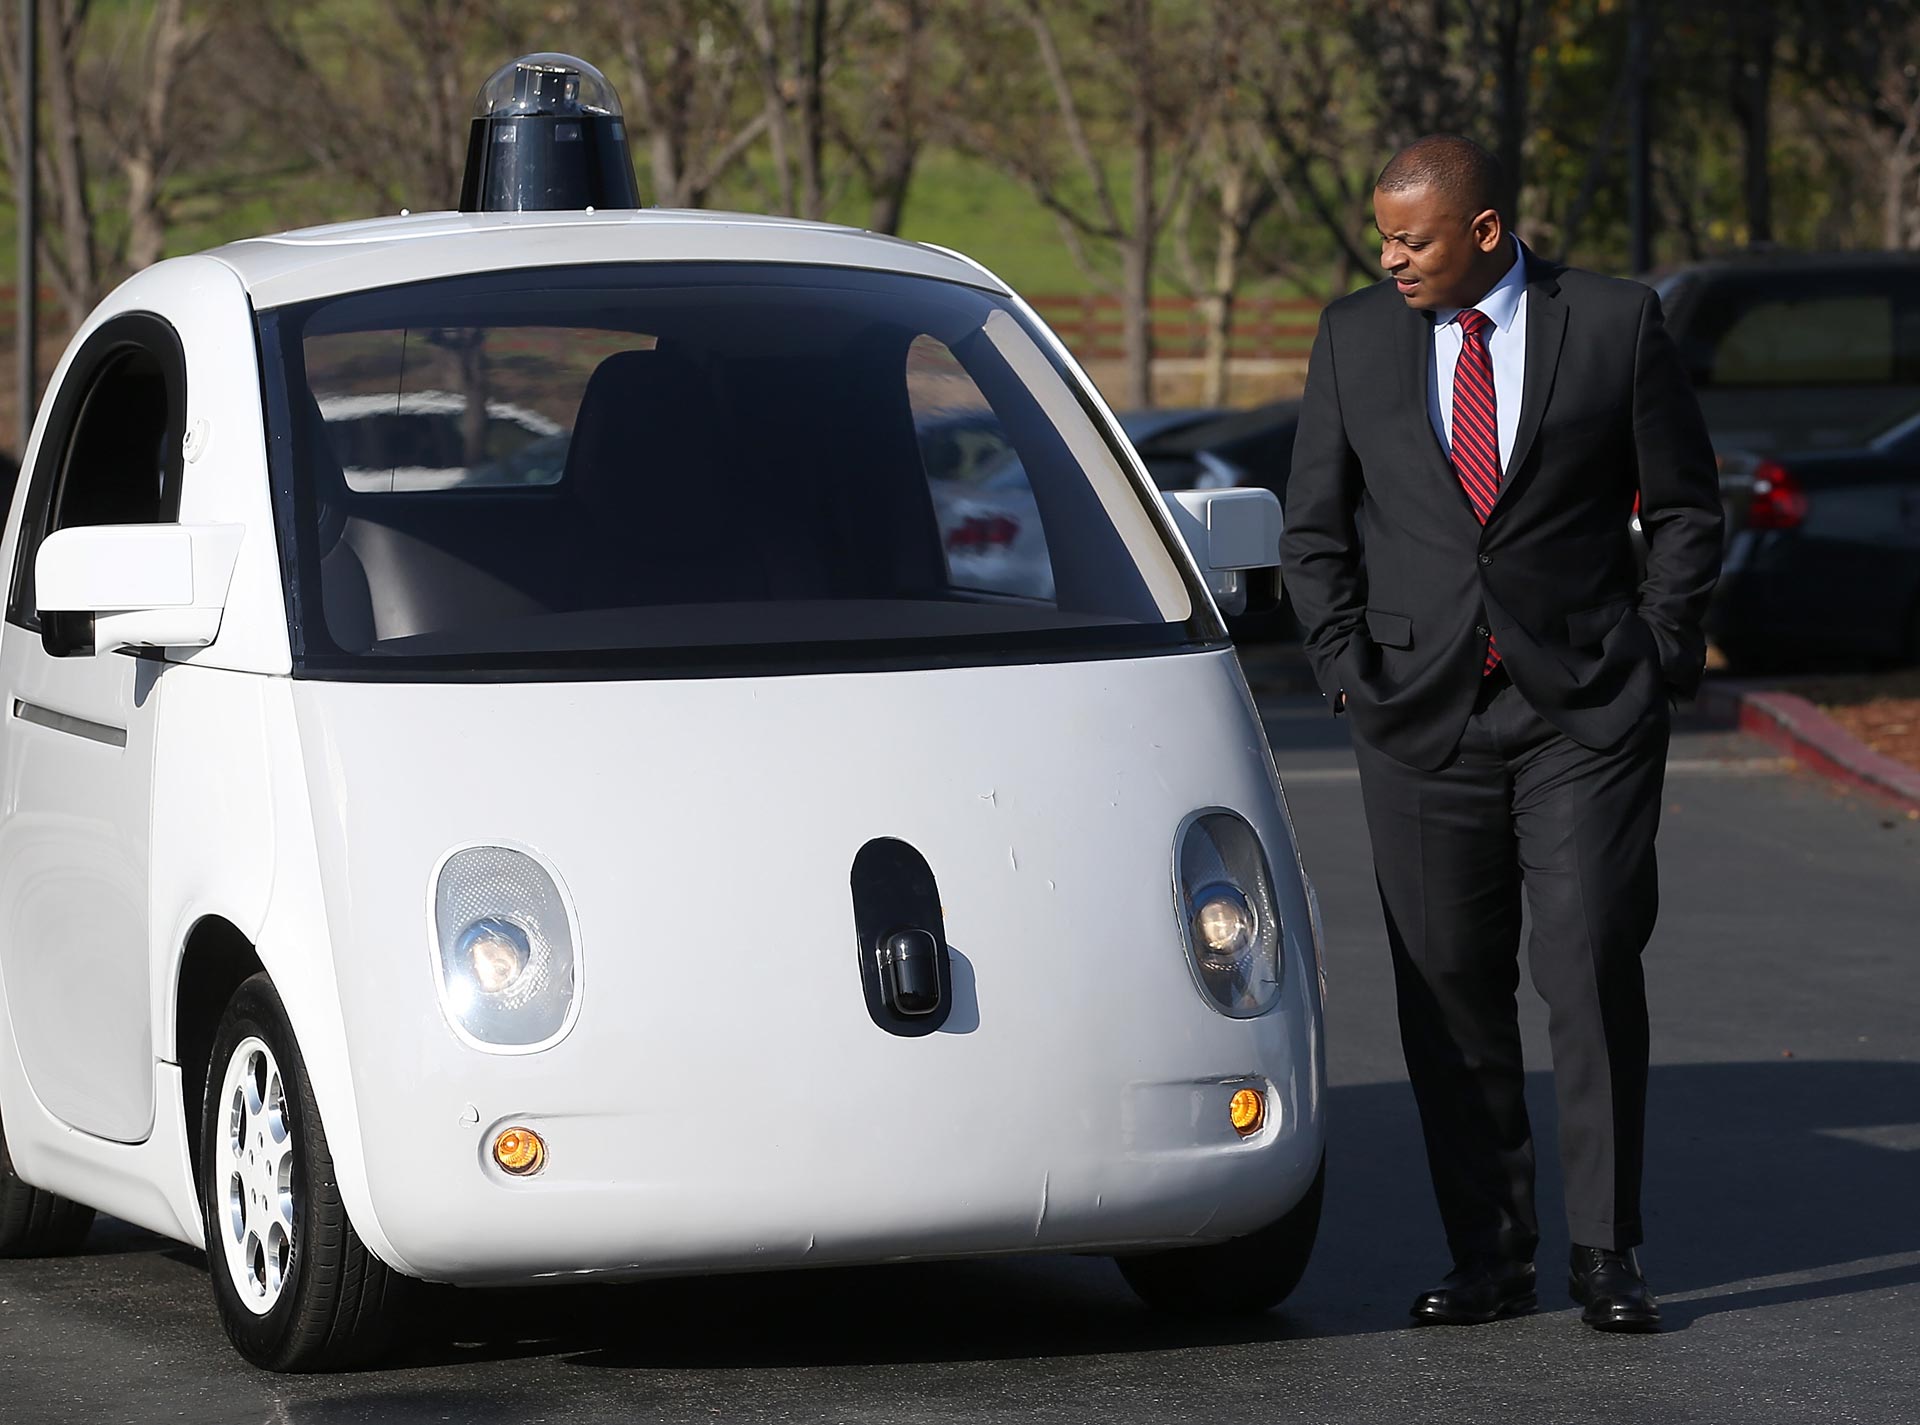 U.S. Transportation Secretary Anthony Foxx inspects a Google self-driving car at the Google headquarters on February 2, 2015.